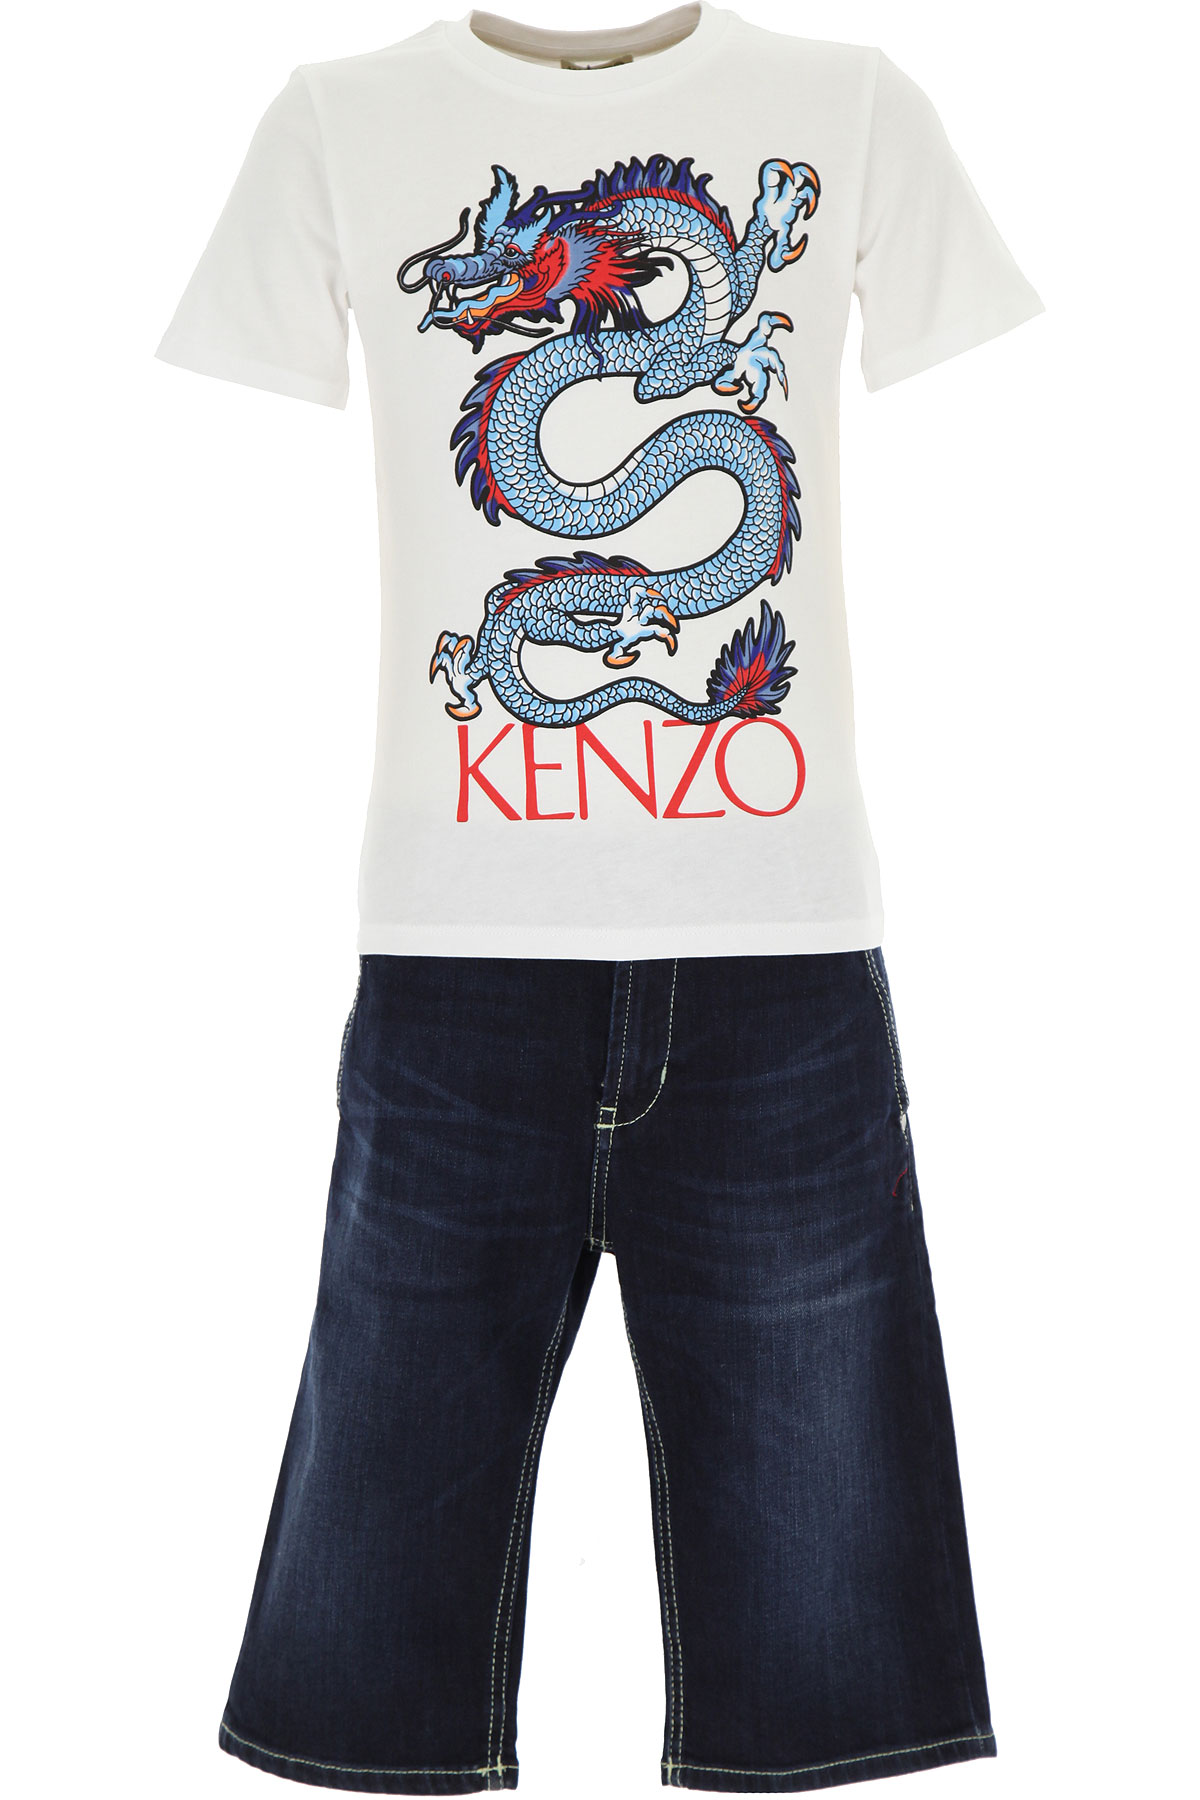 kenzo kidswear sale